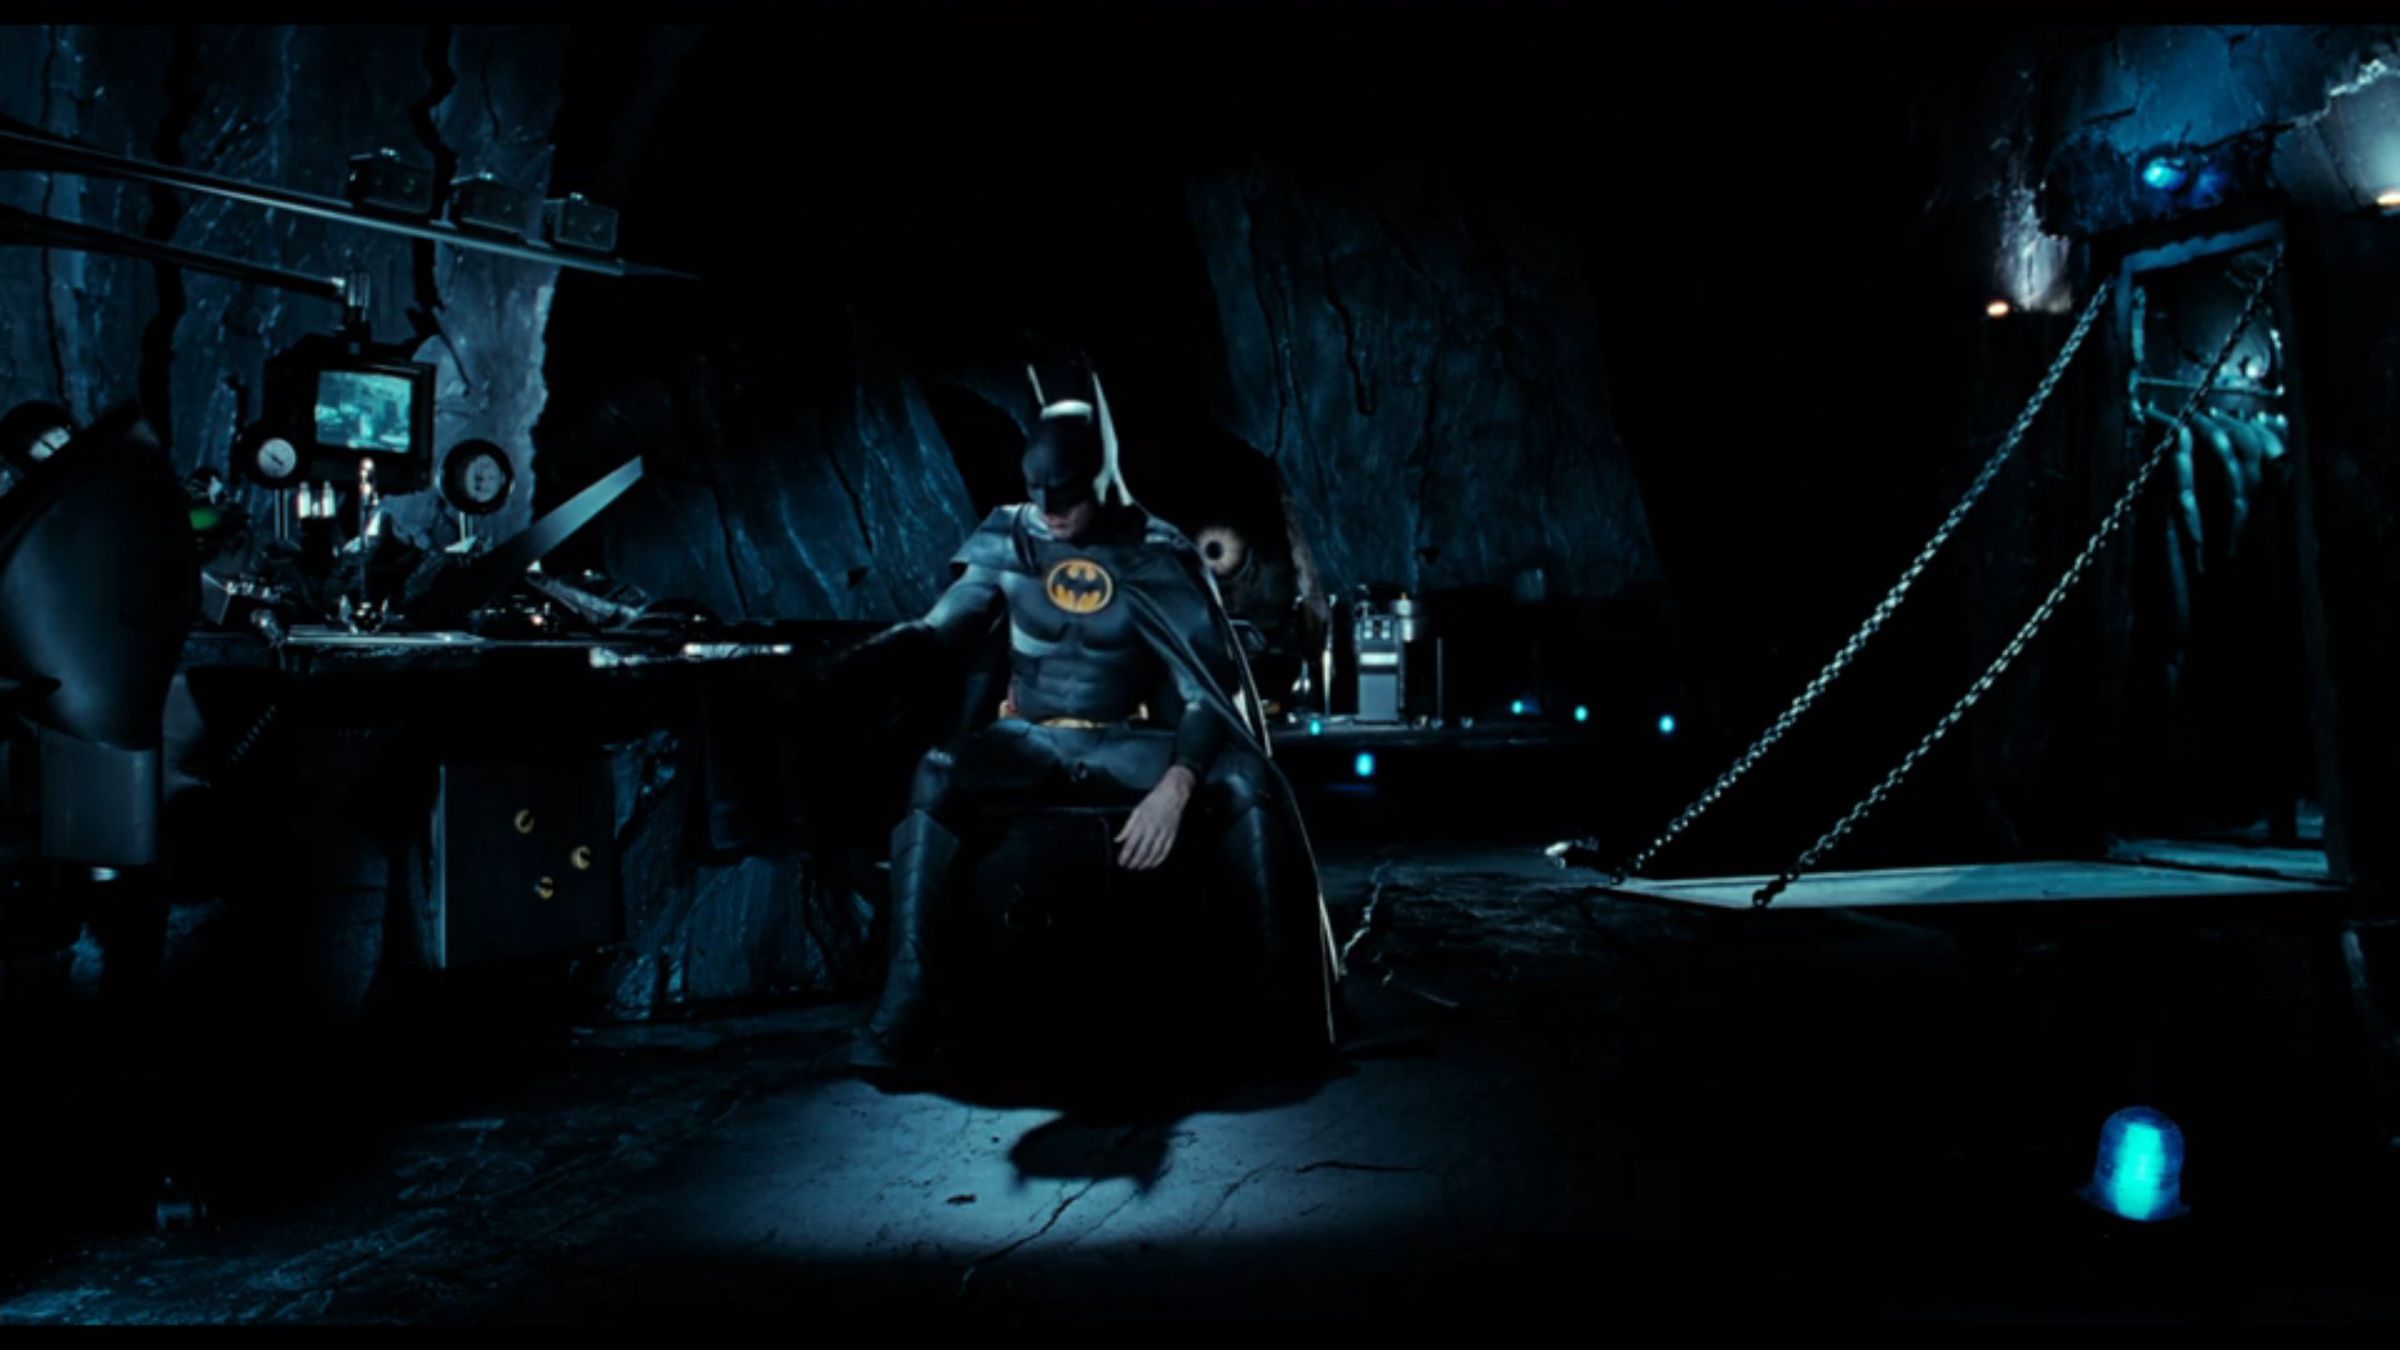 Another Batman Returns still showing the drawbridge vault.